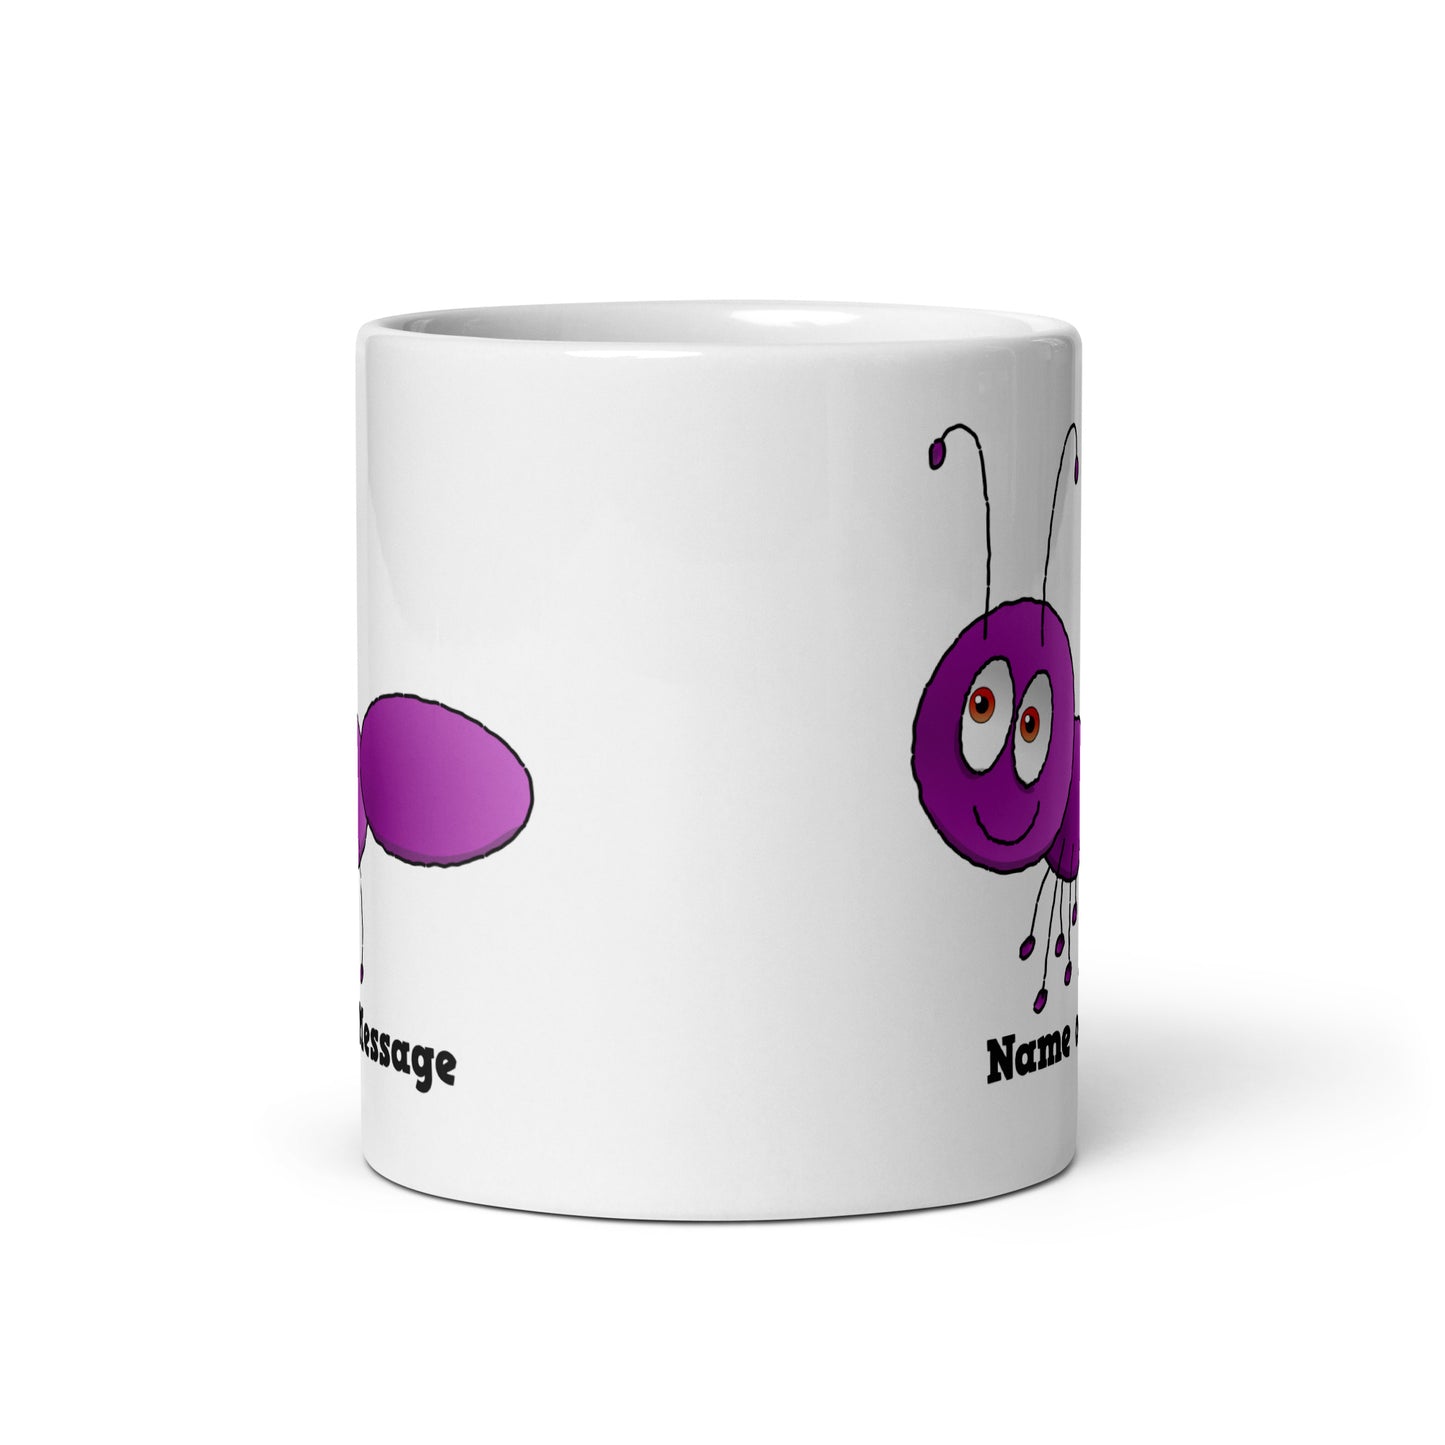 Personalized Purple Ant Mug